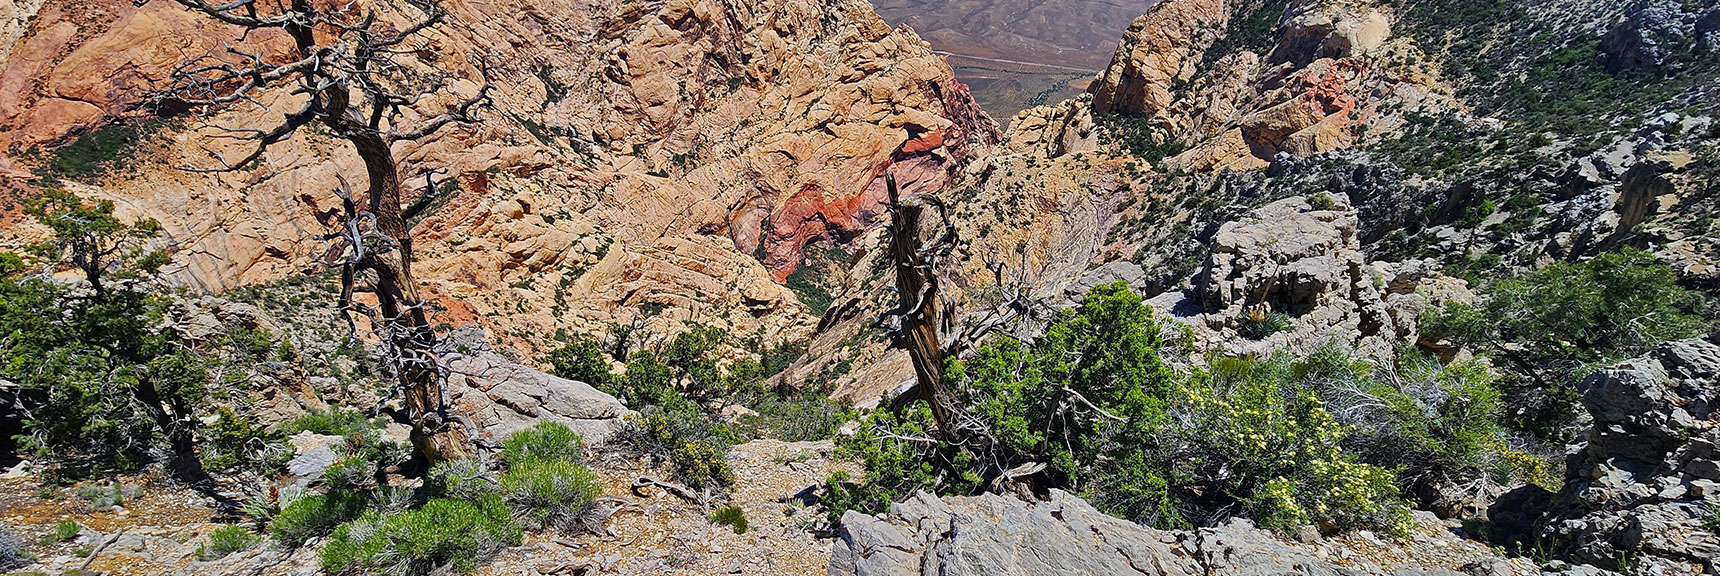 Another Perspective Down into First Creek Canyon | Mt Wilson to Hidden Peak | Upper Crest Ridgeline | Rainbow Mountain Wilderness, Nevada